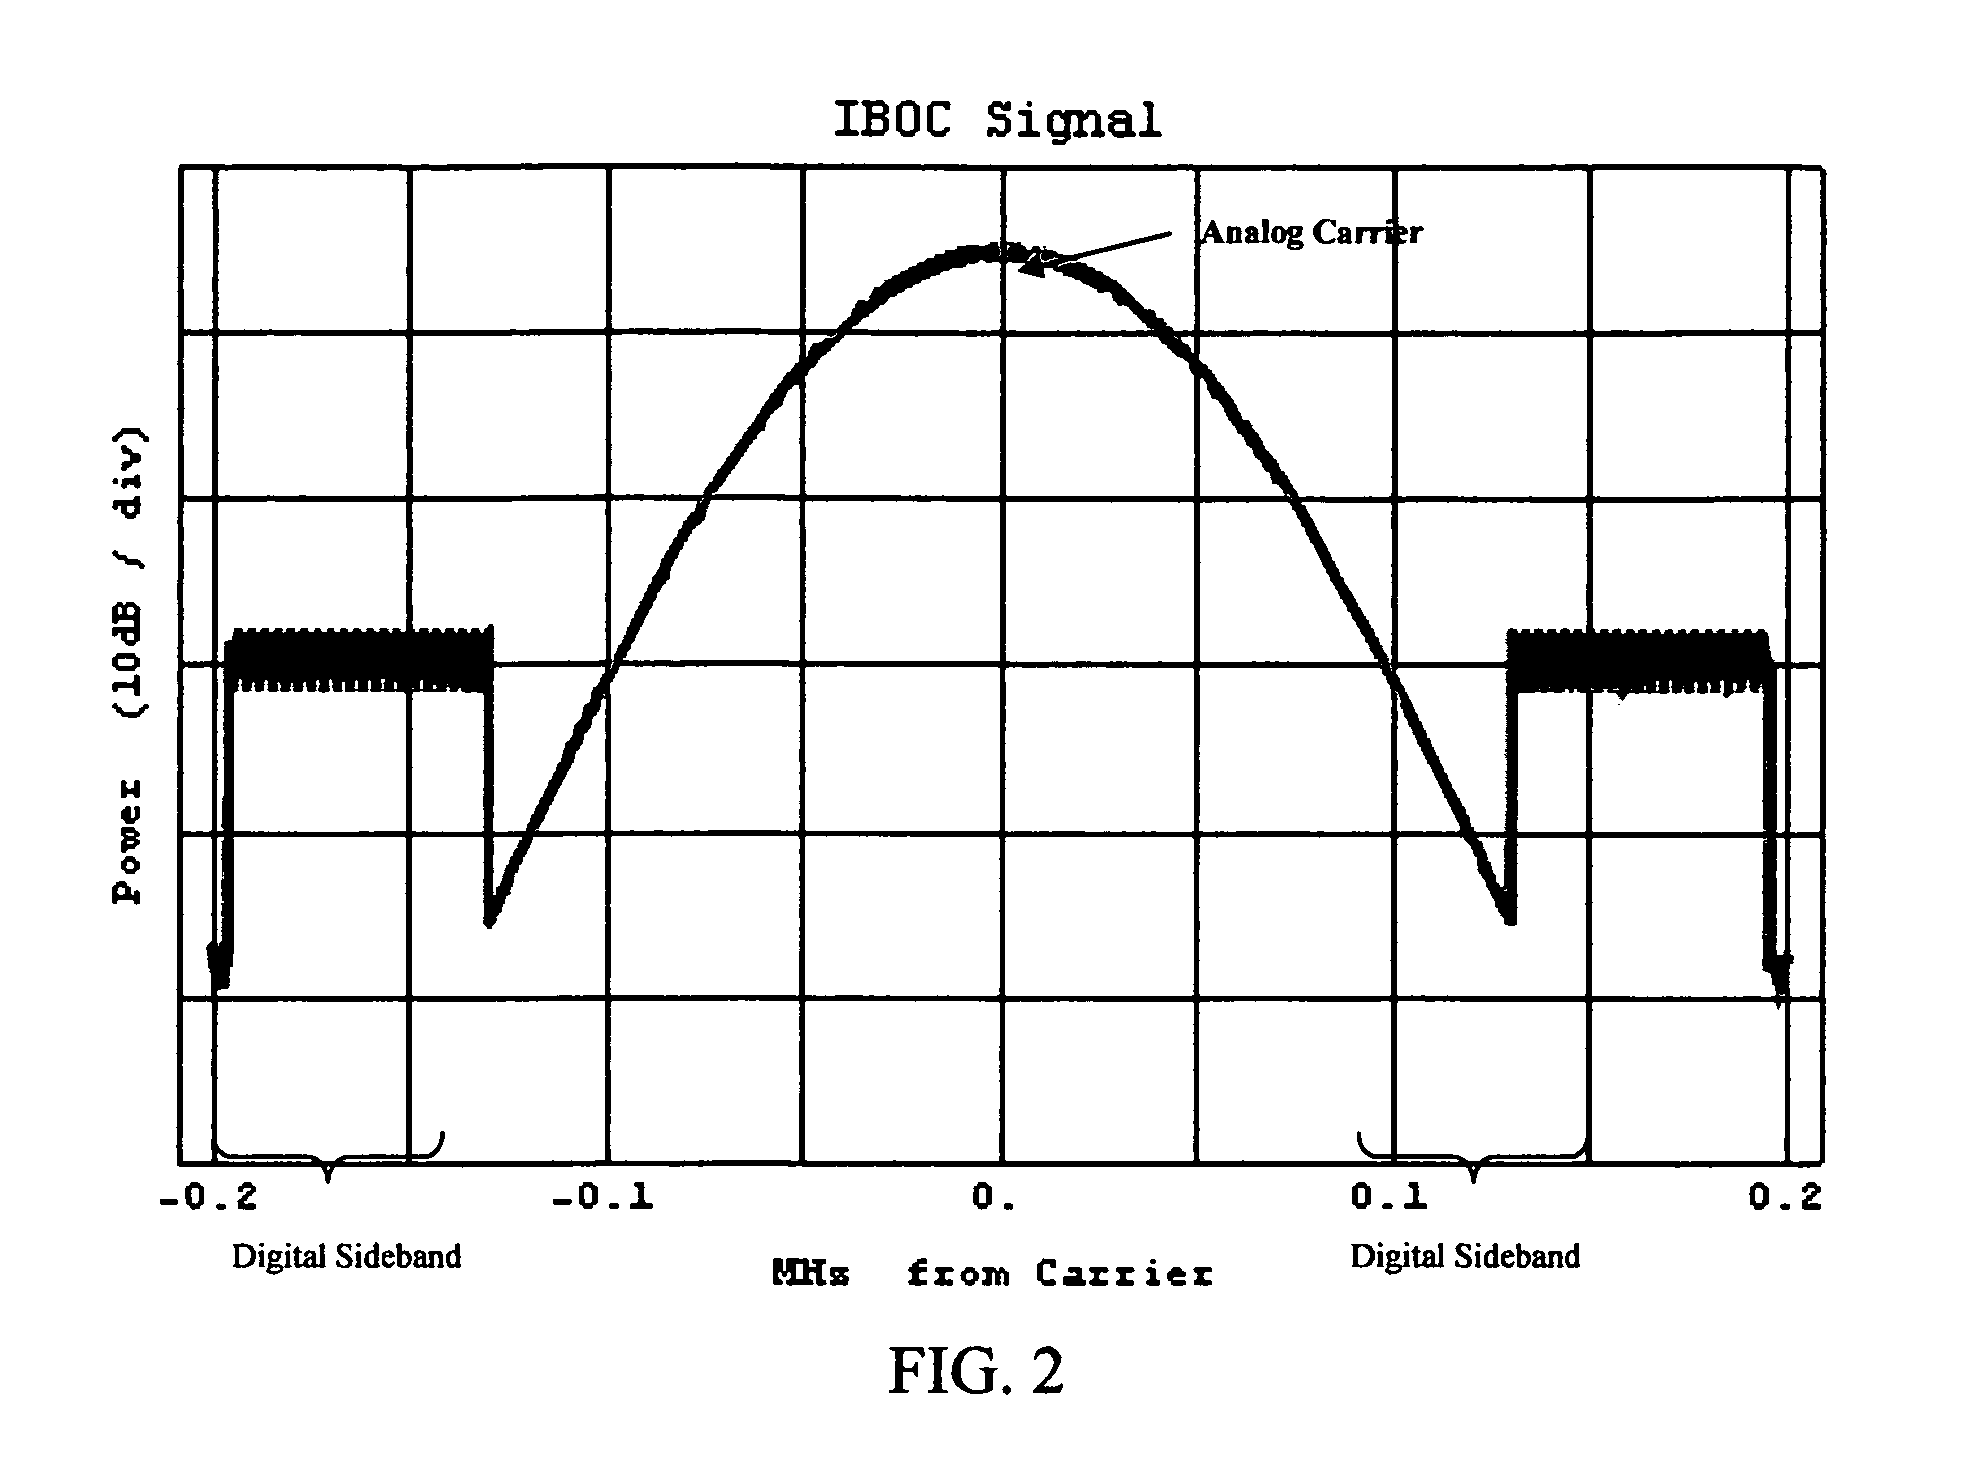 Medium loss high power IBOC combiner